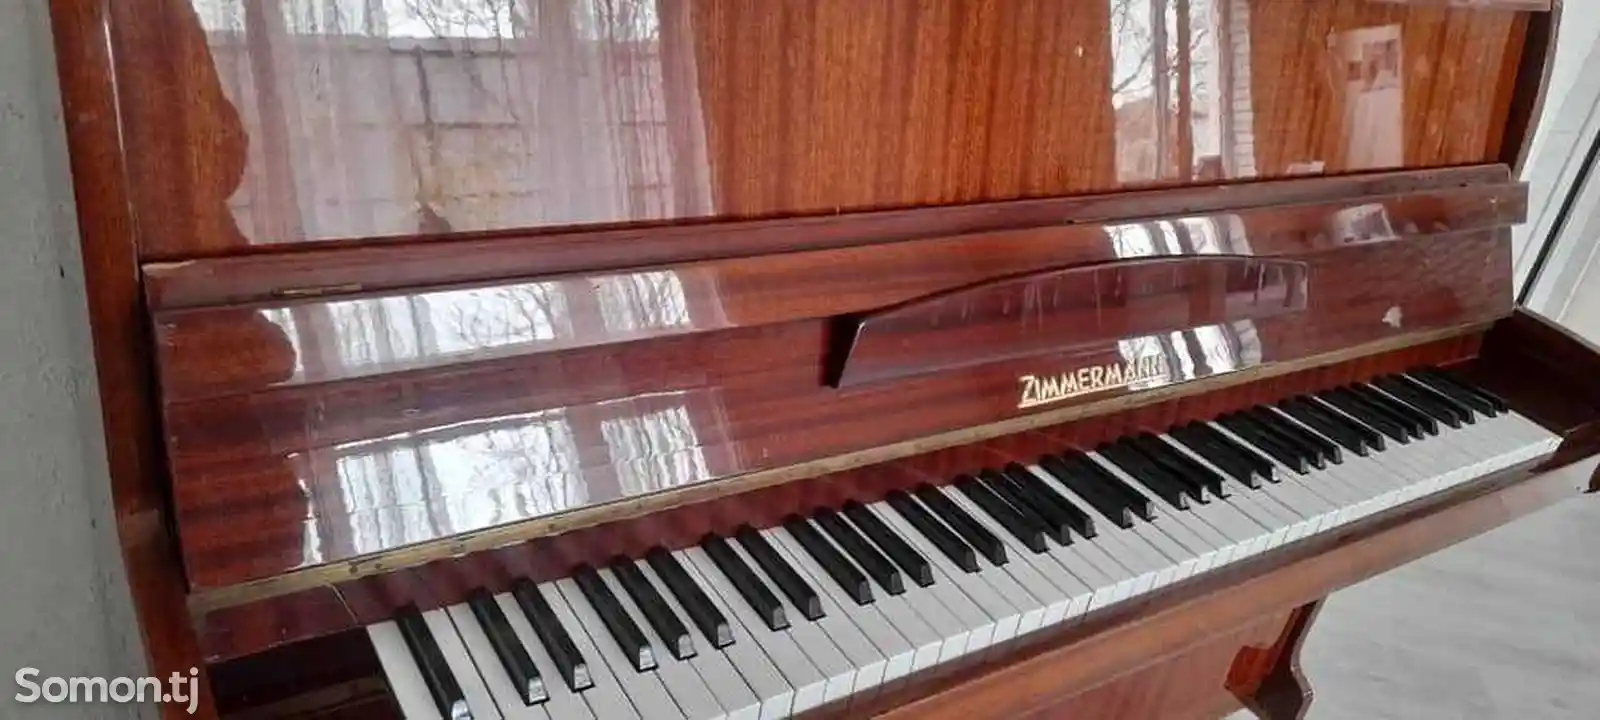 Фортепиано Zimmermann-1